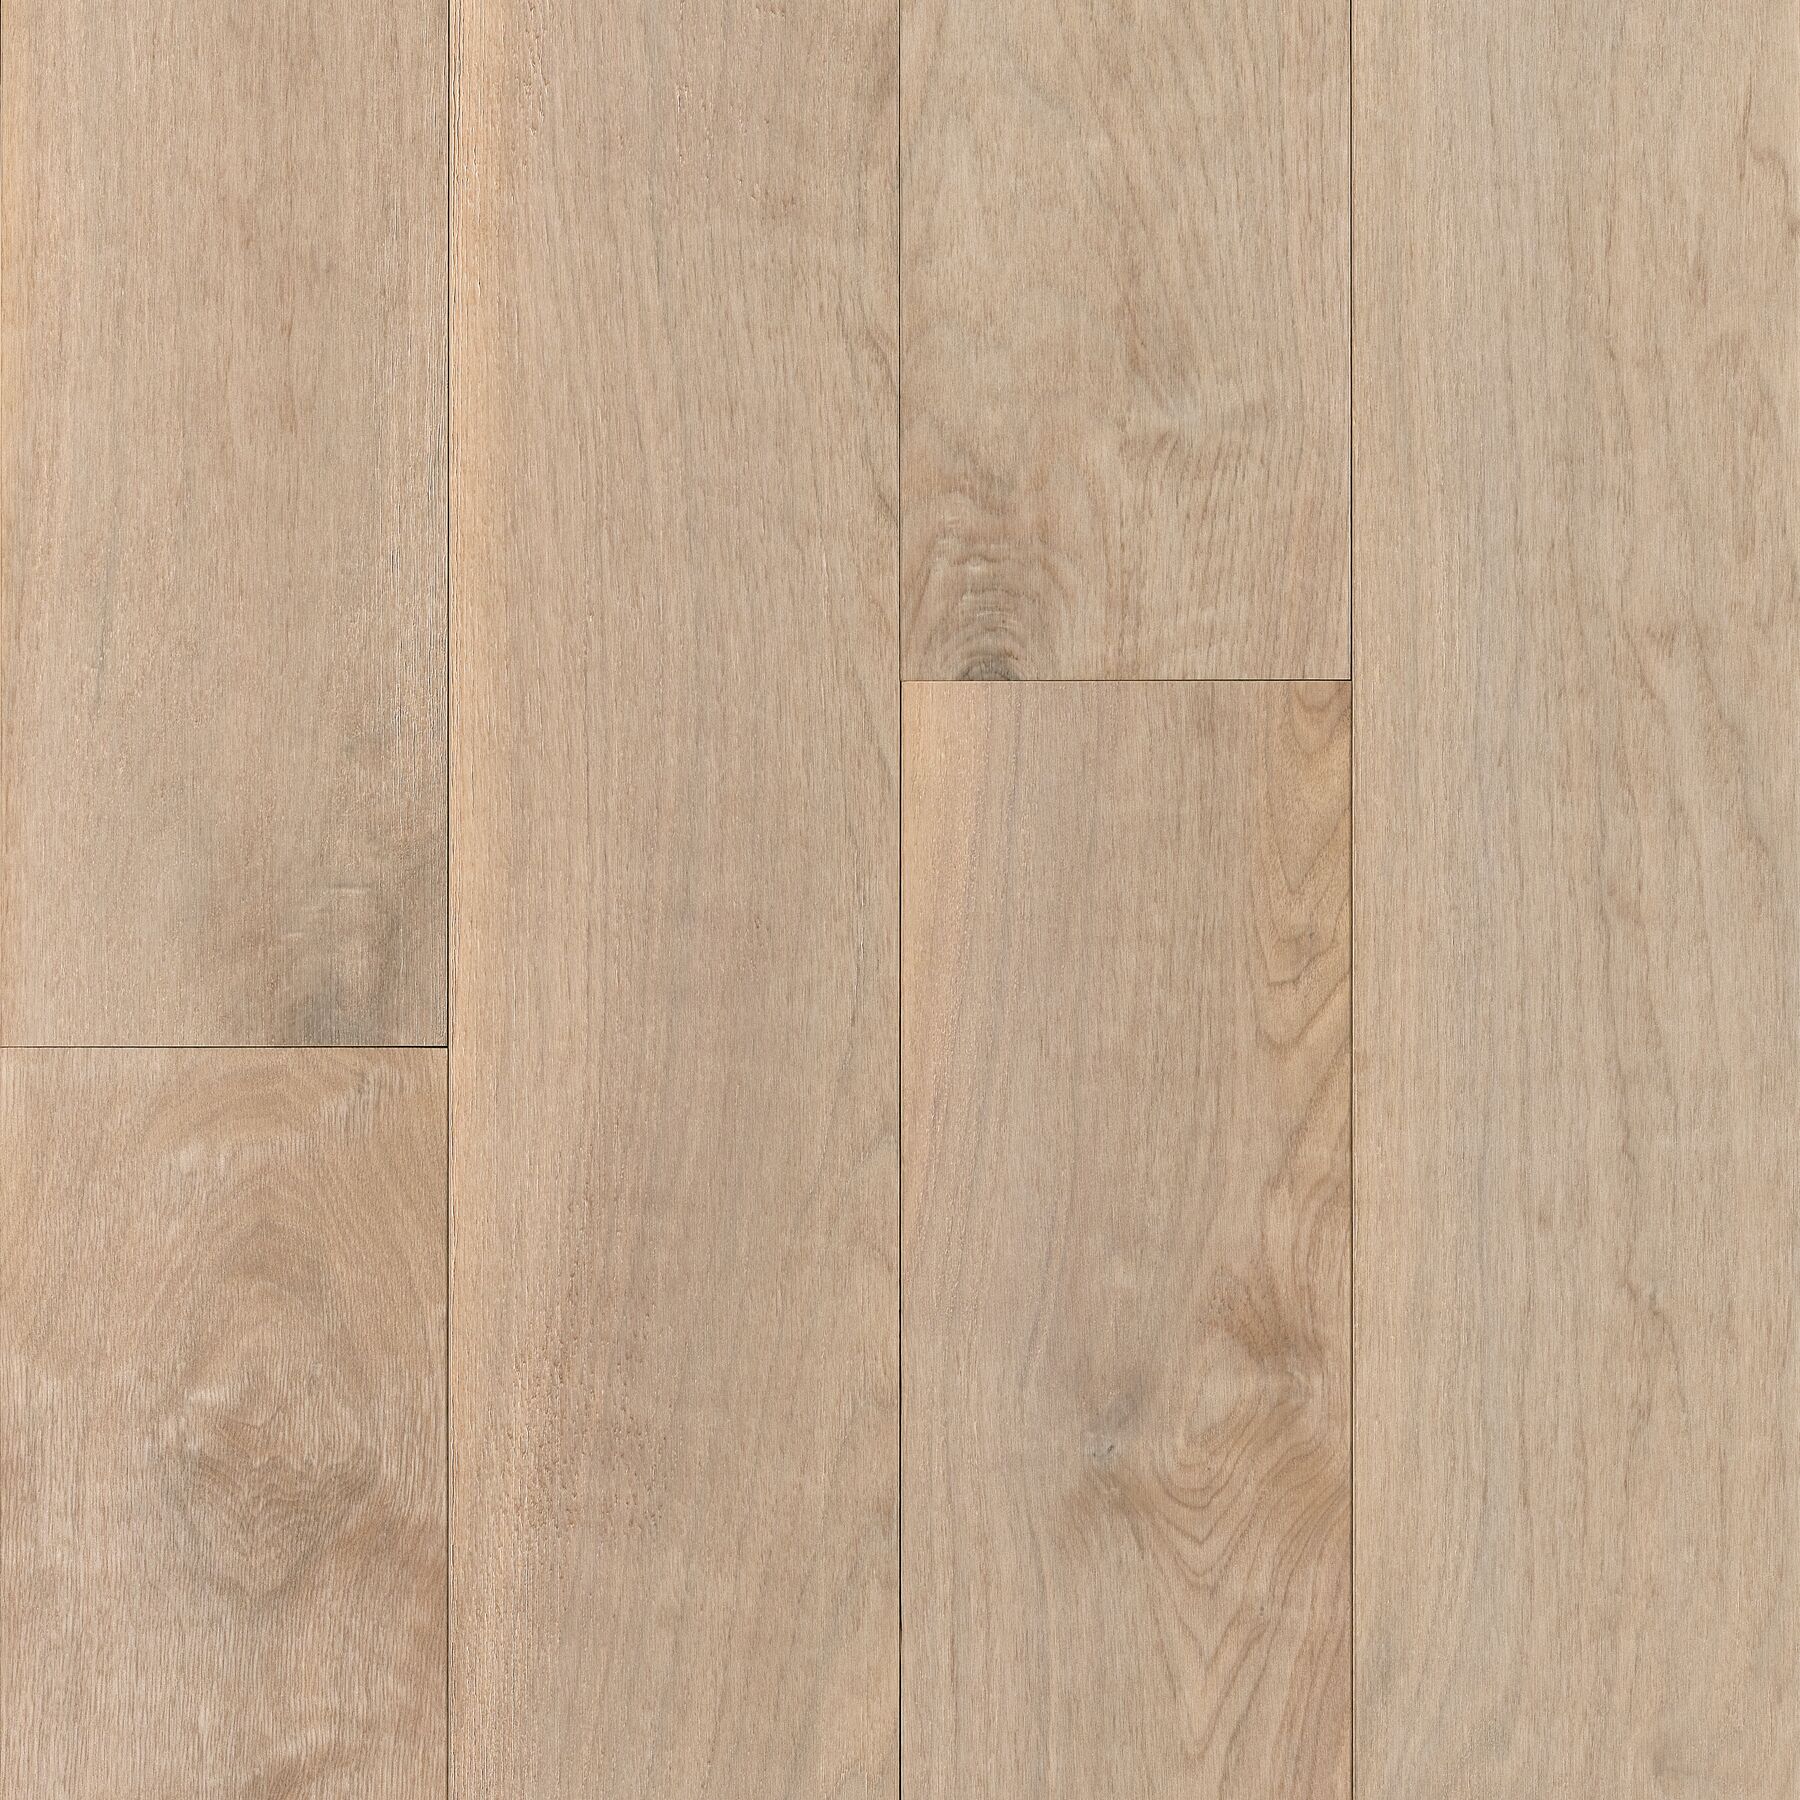 Pet-Friendly Wood Flooring - New Siberian Dogwood Hardwood Flooring with densified wood